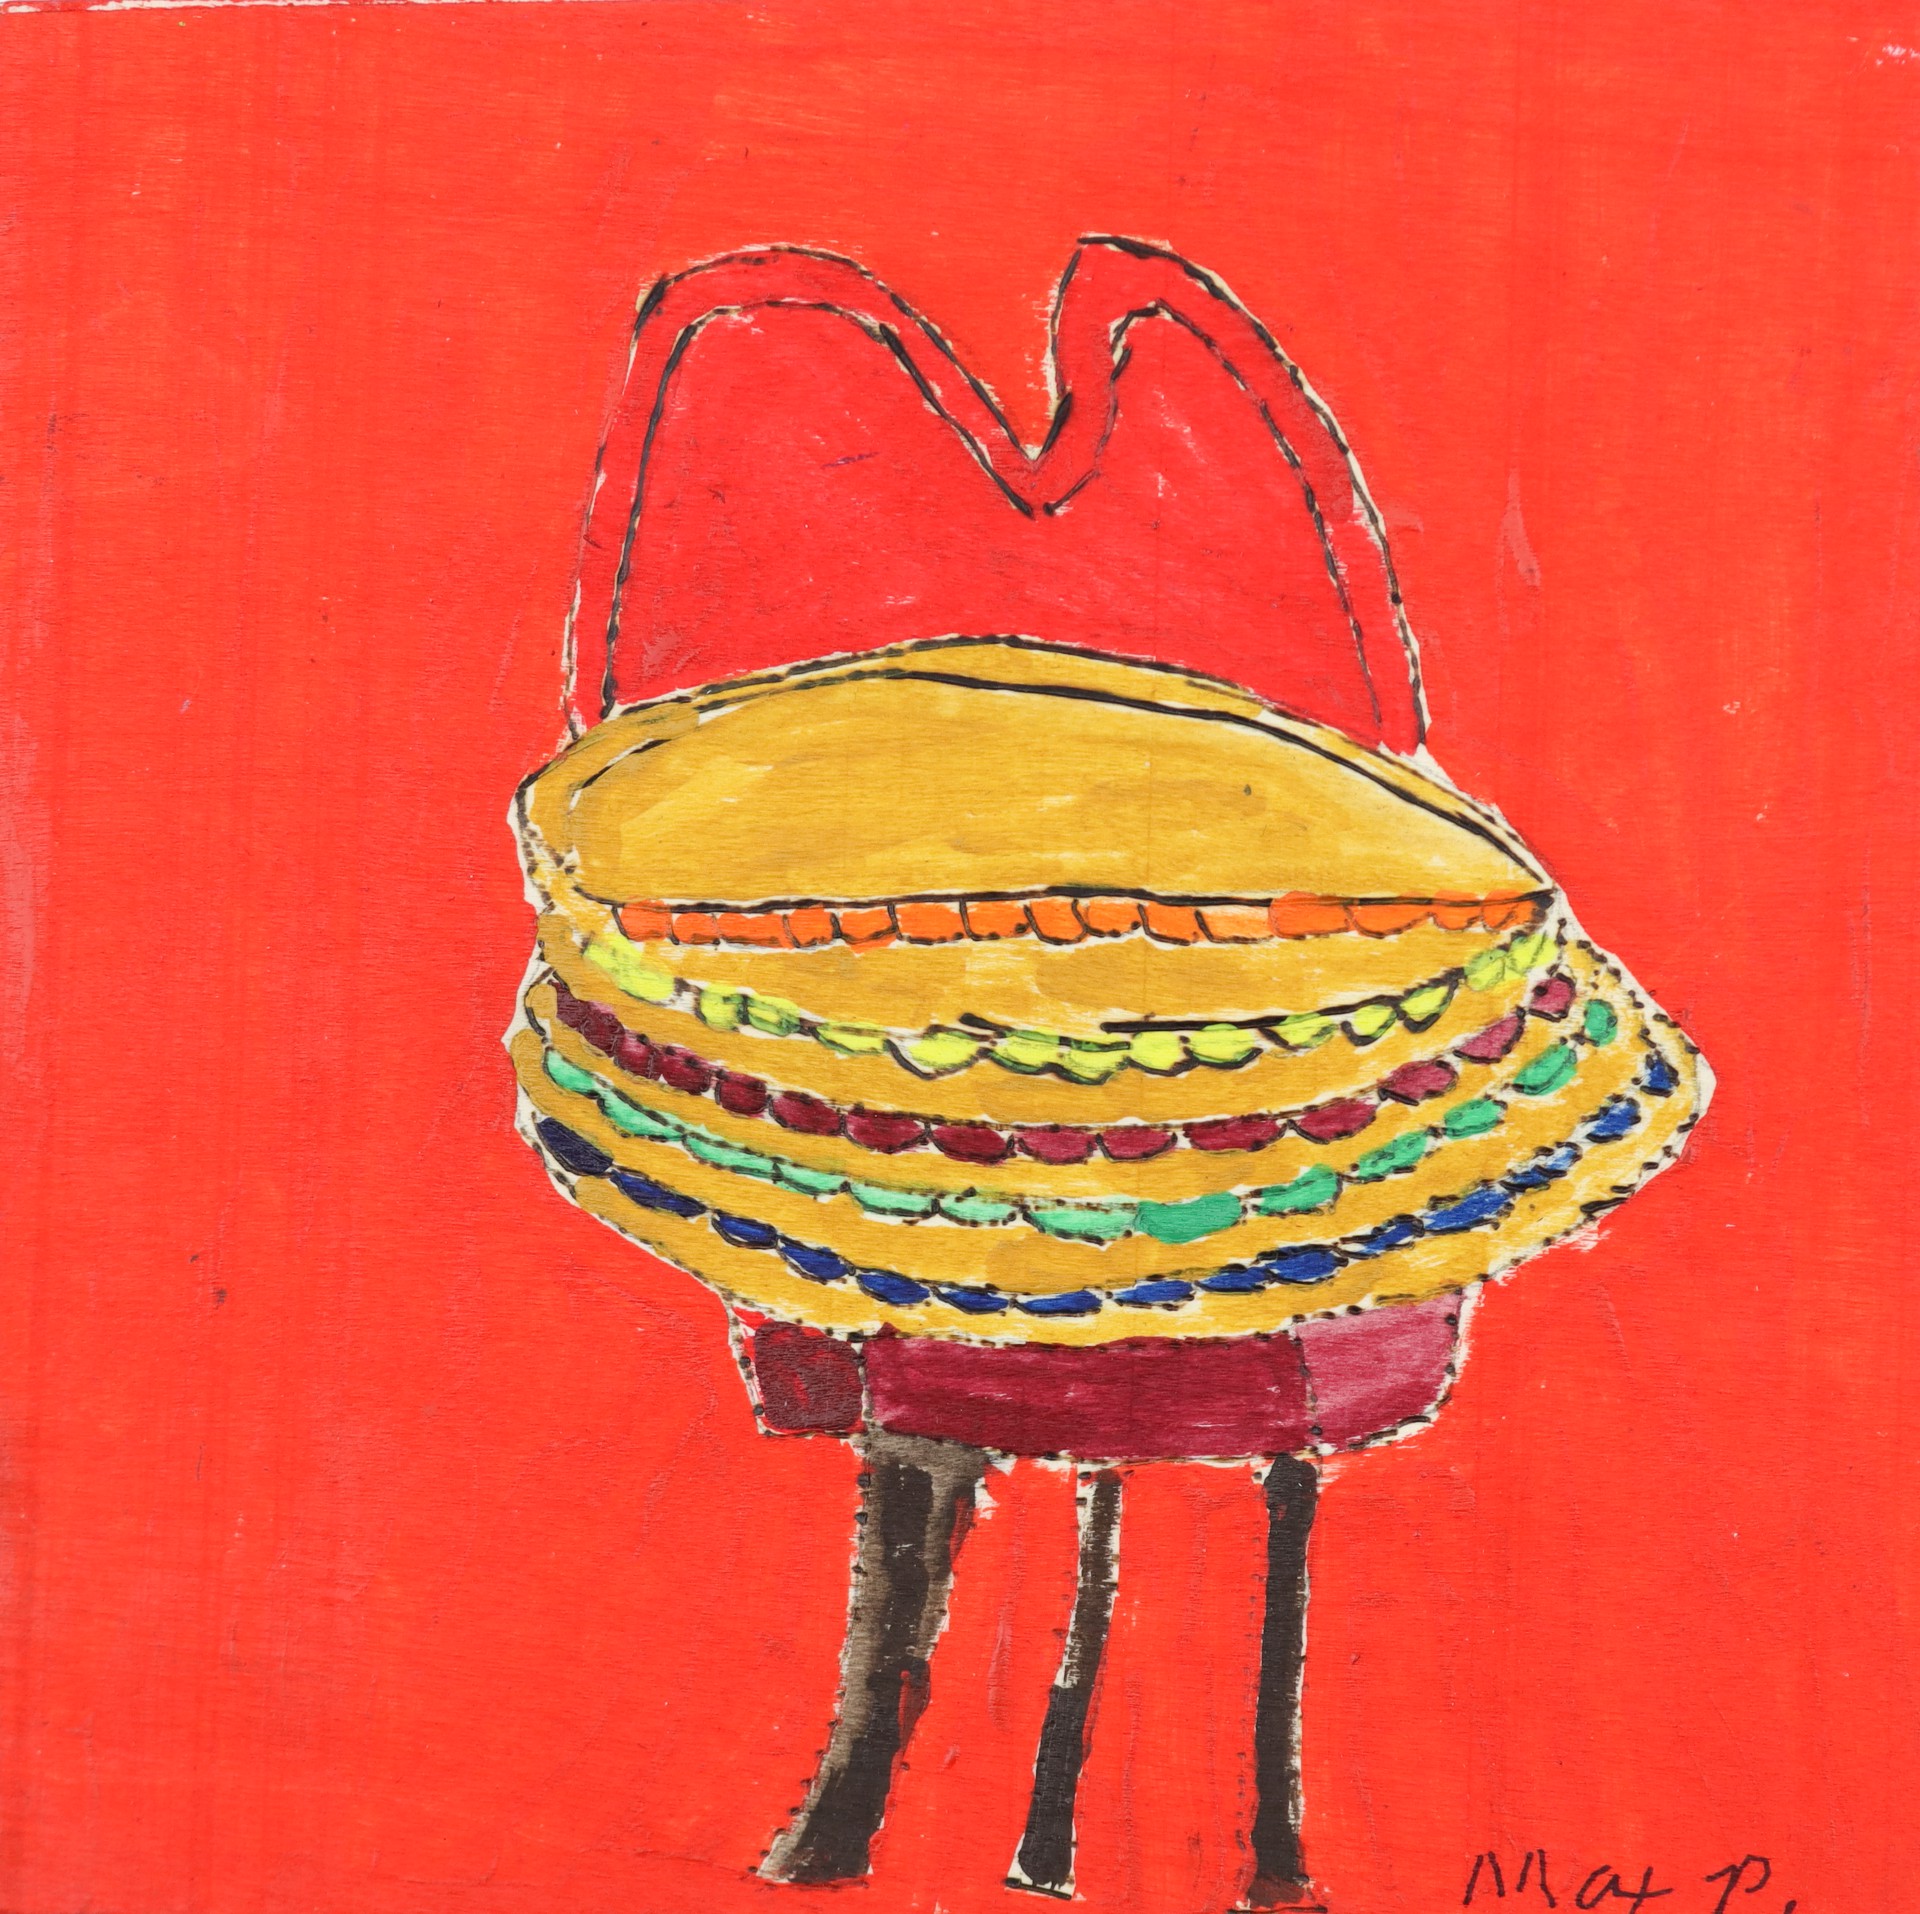 Big Mac Chair by Max Poznerzon